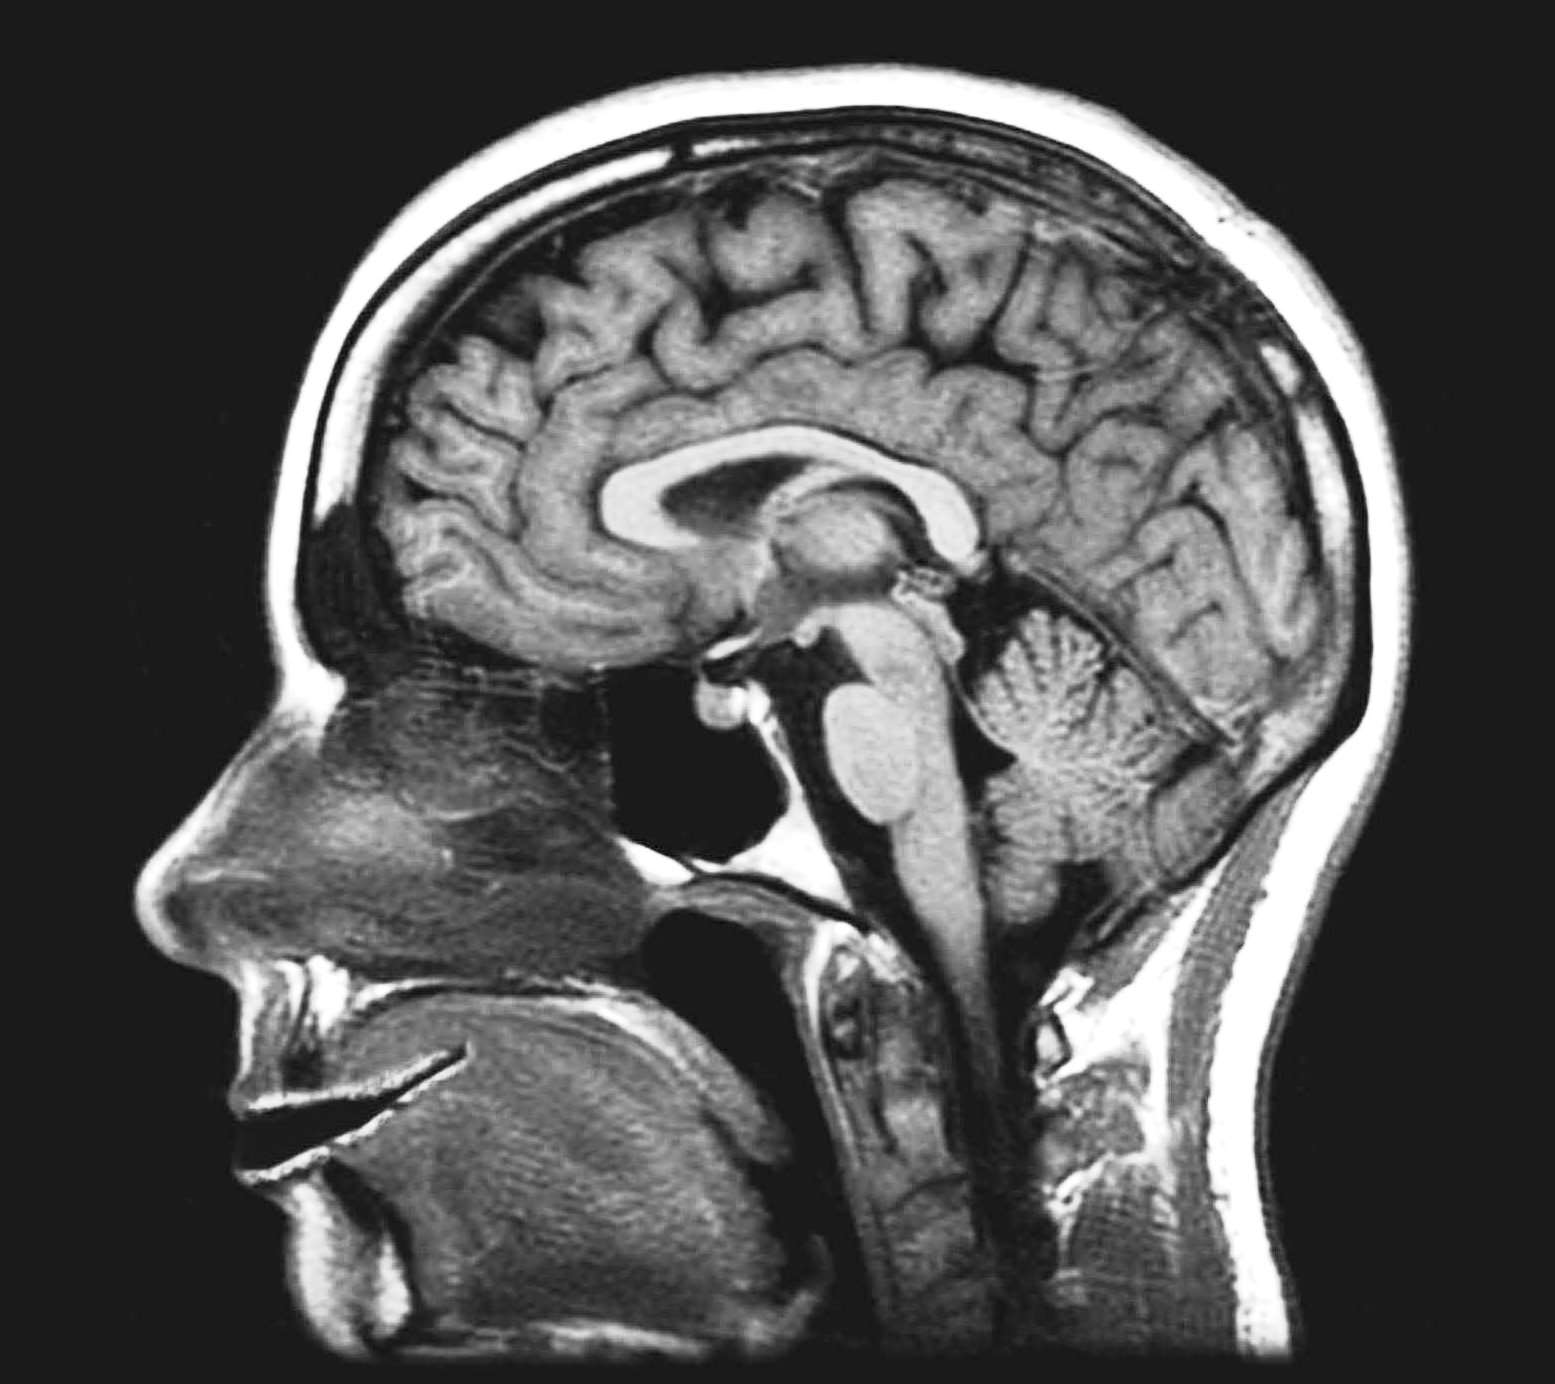 Фото снимок МРТ головного мозга здорового человека (норма)